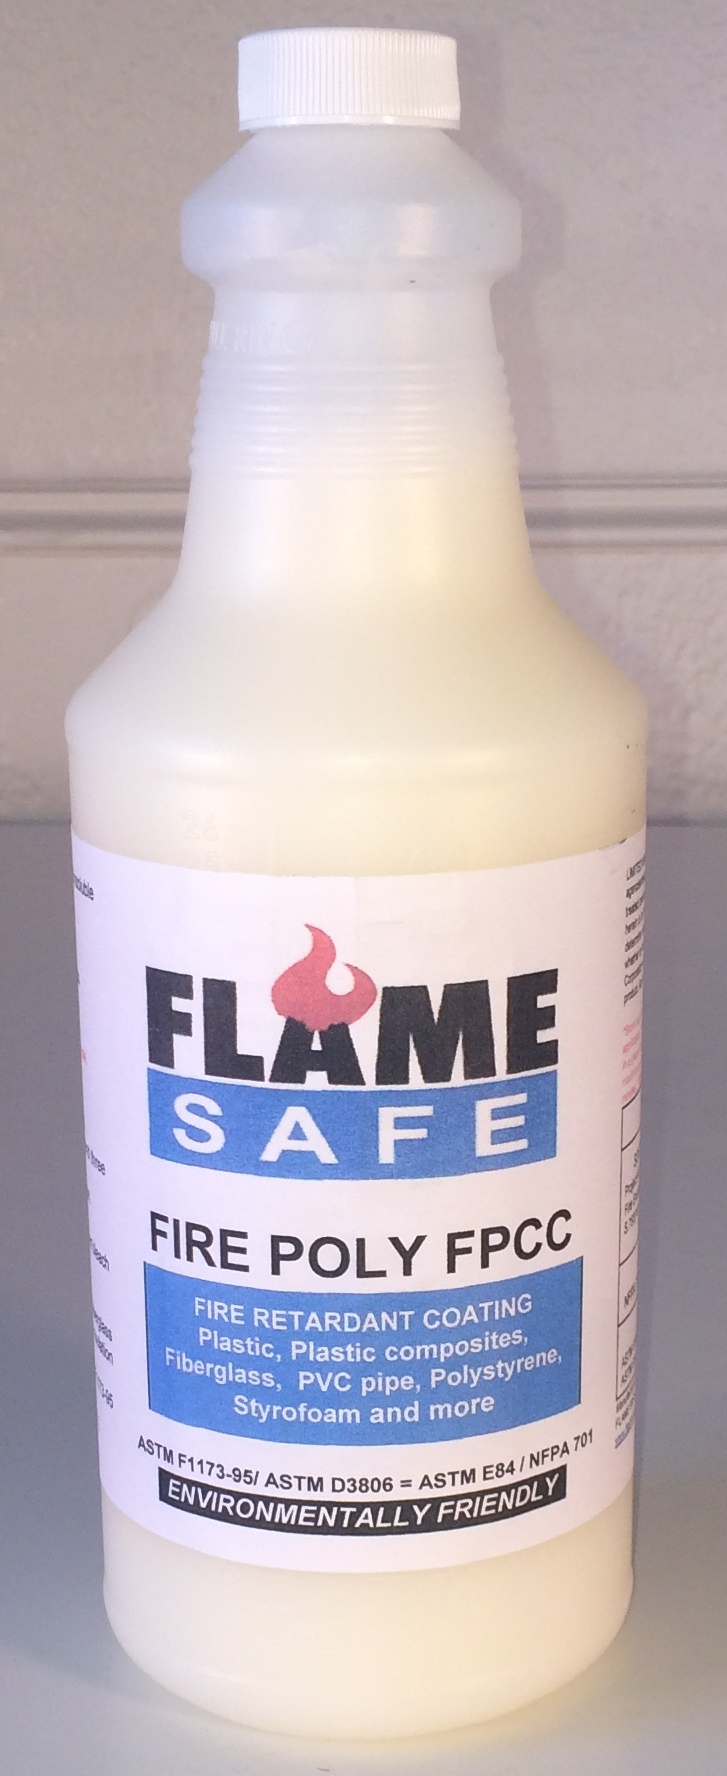 Fire Poly FPCC fire retardant quart bottle